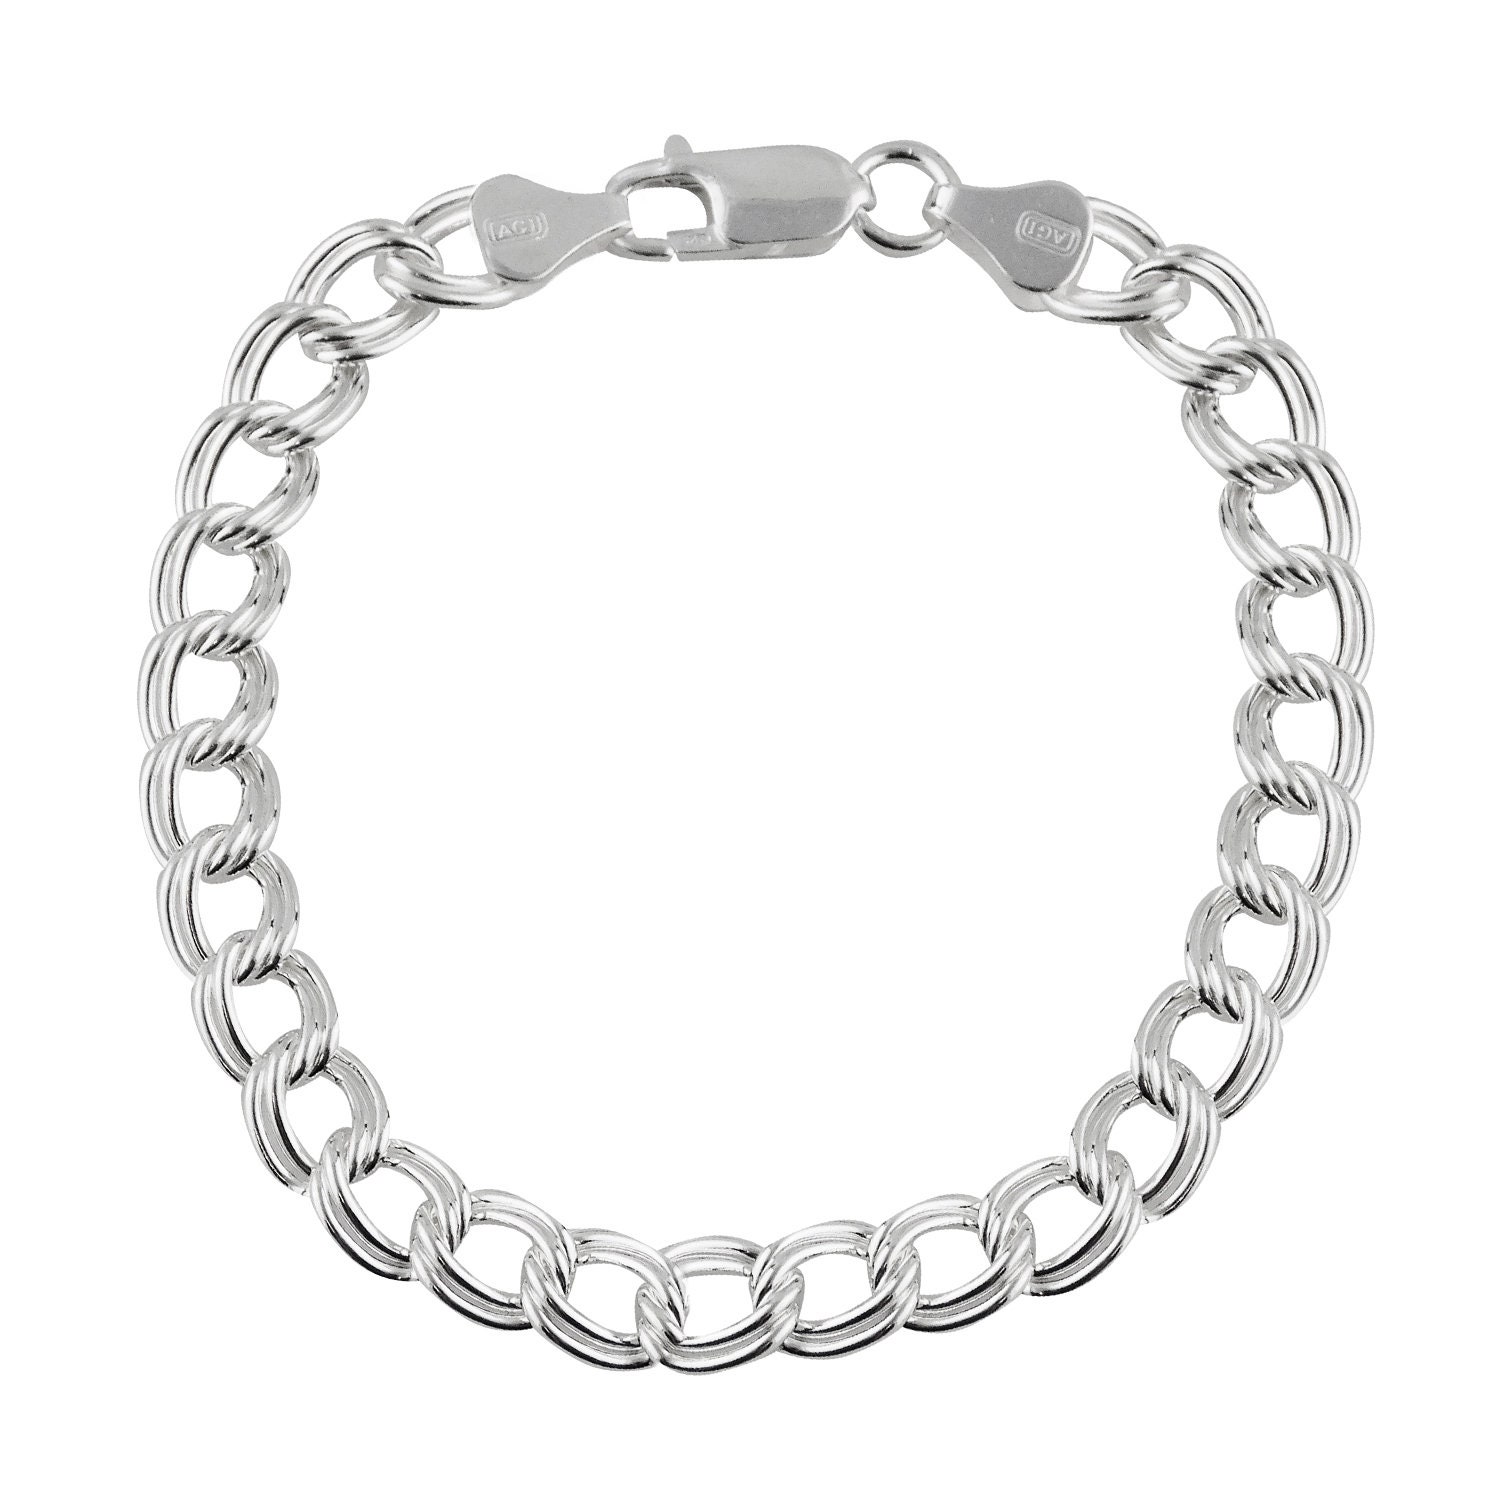 Buy 7 or 8 Sterling Silver Double Link Charm Bracelet 6.9mm Wide